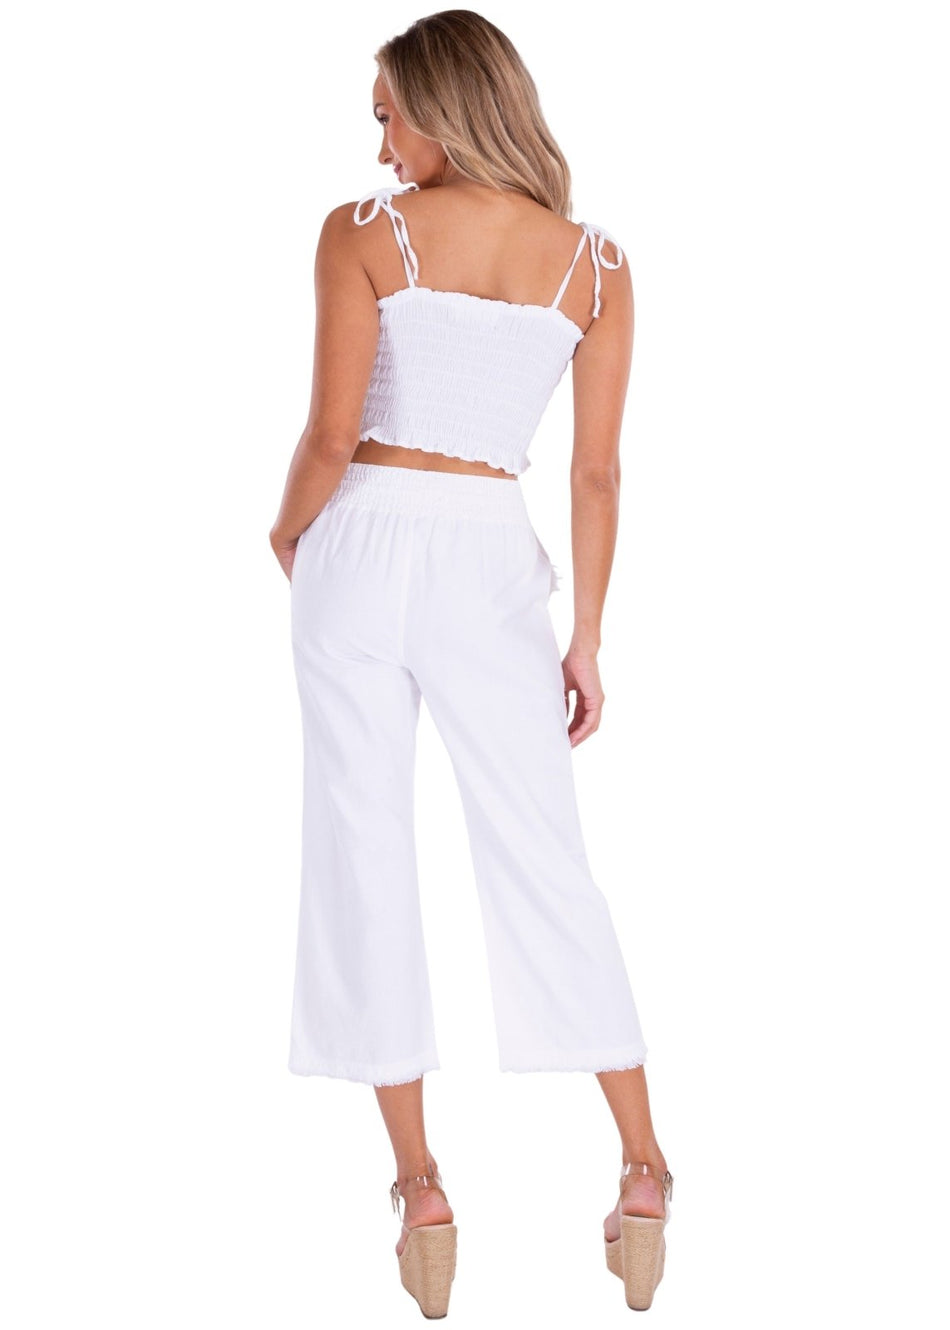 'Corinne' White Cotton Pants - Seaspice Resort Wear